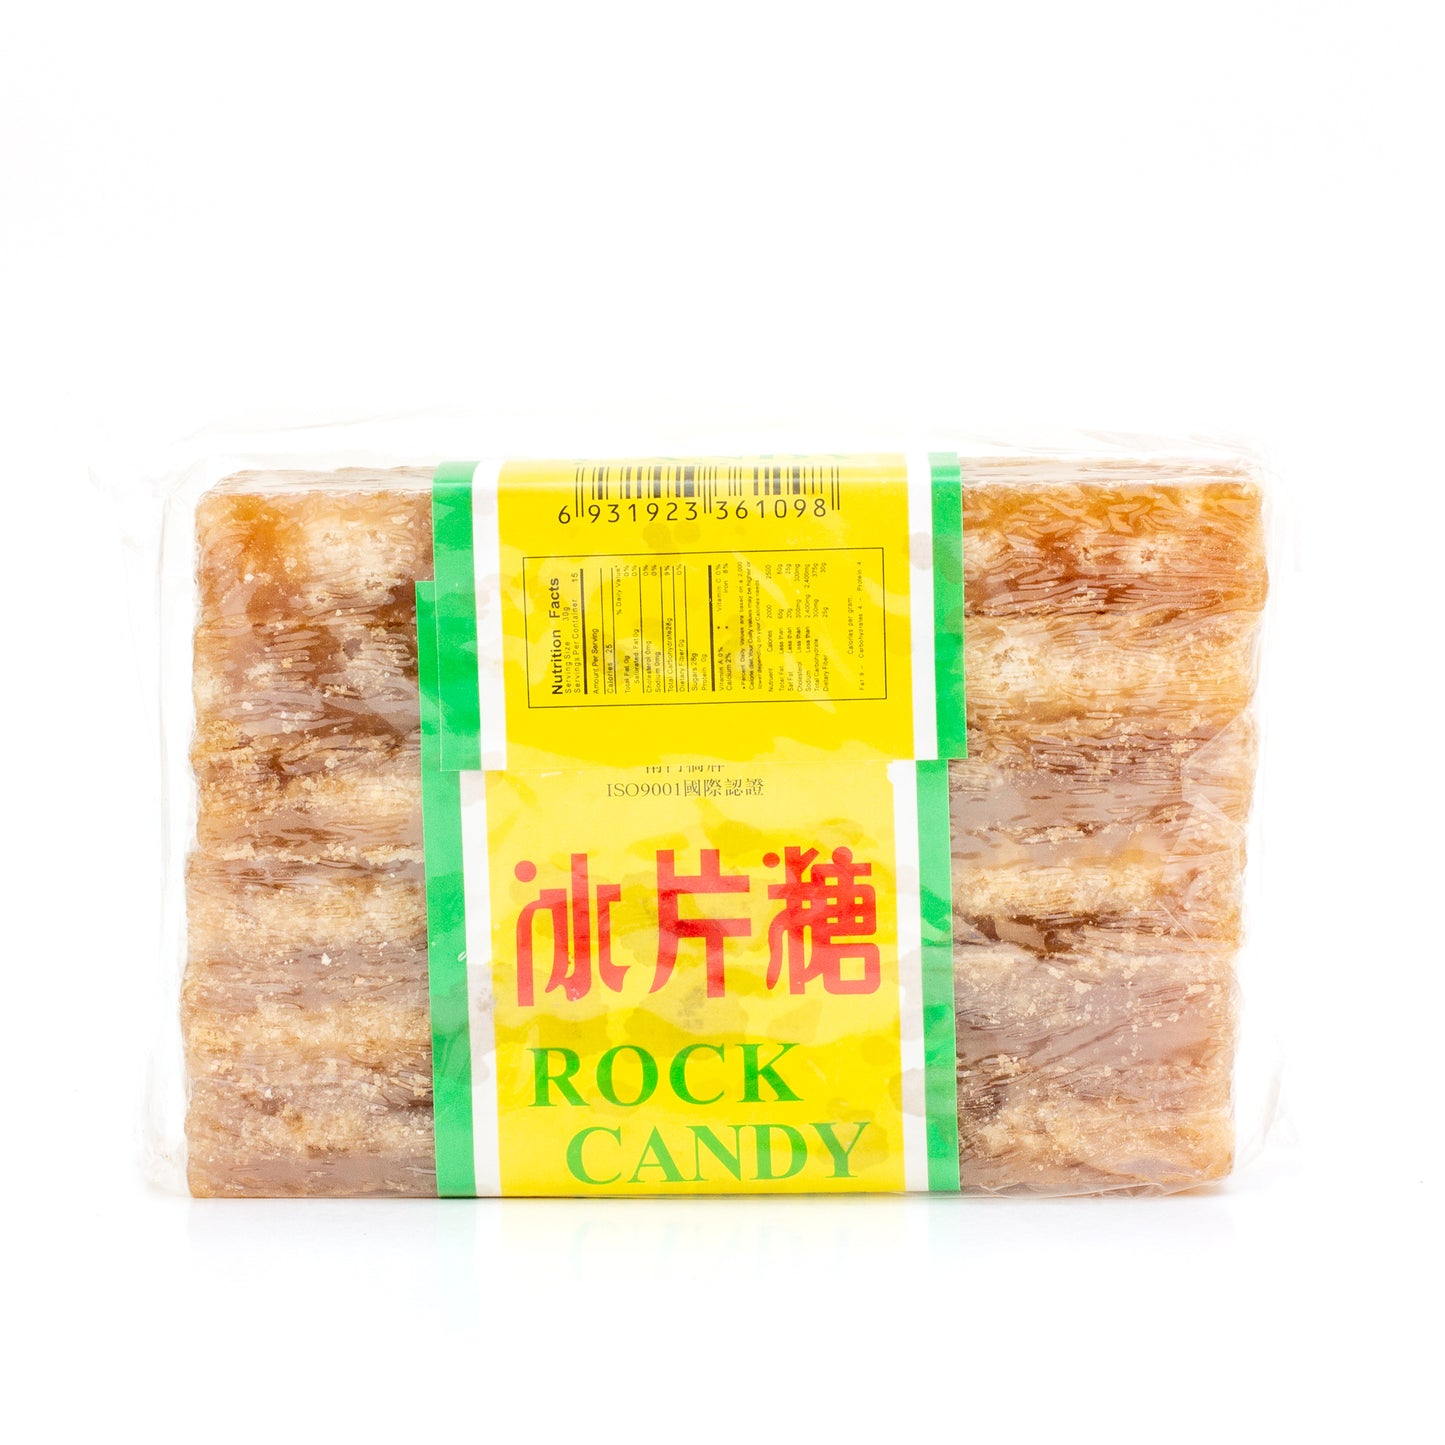 Rock Candy Slices 冰片糖 (1 LB)